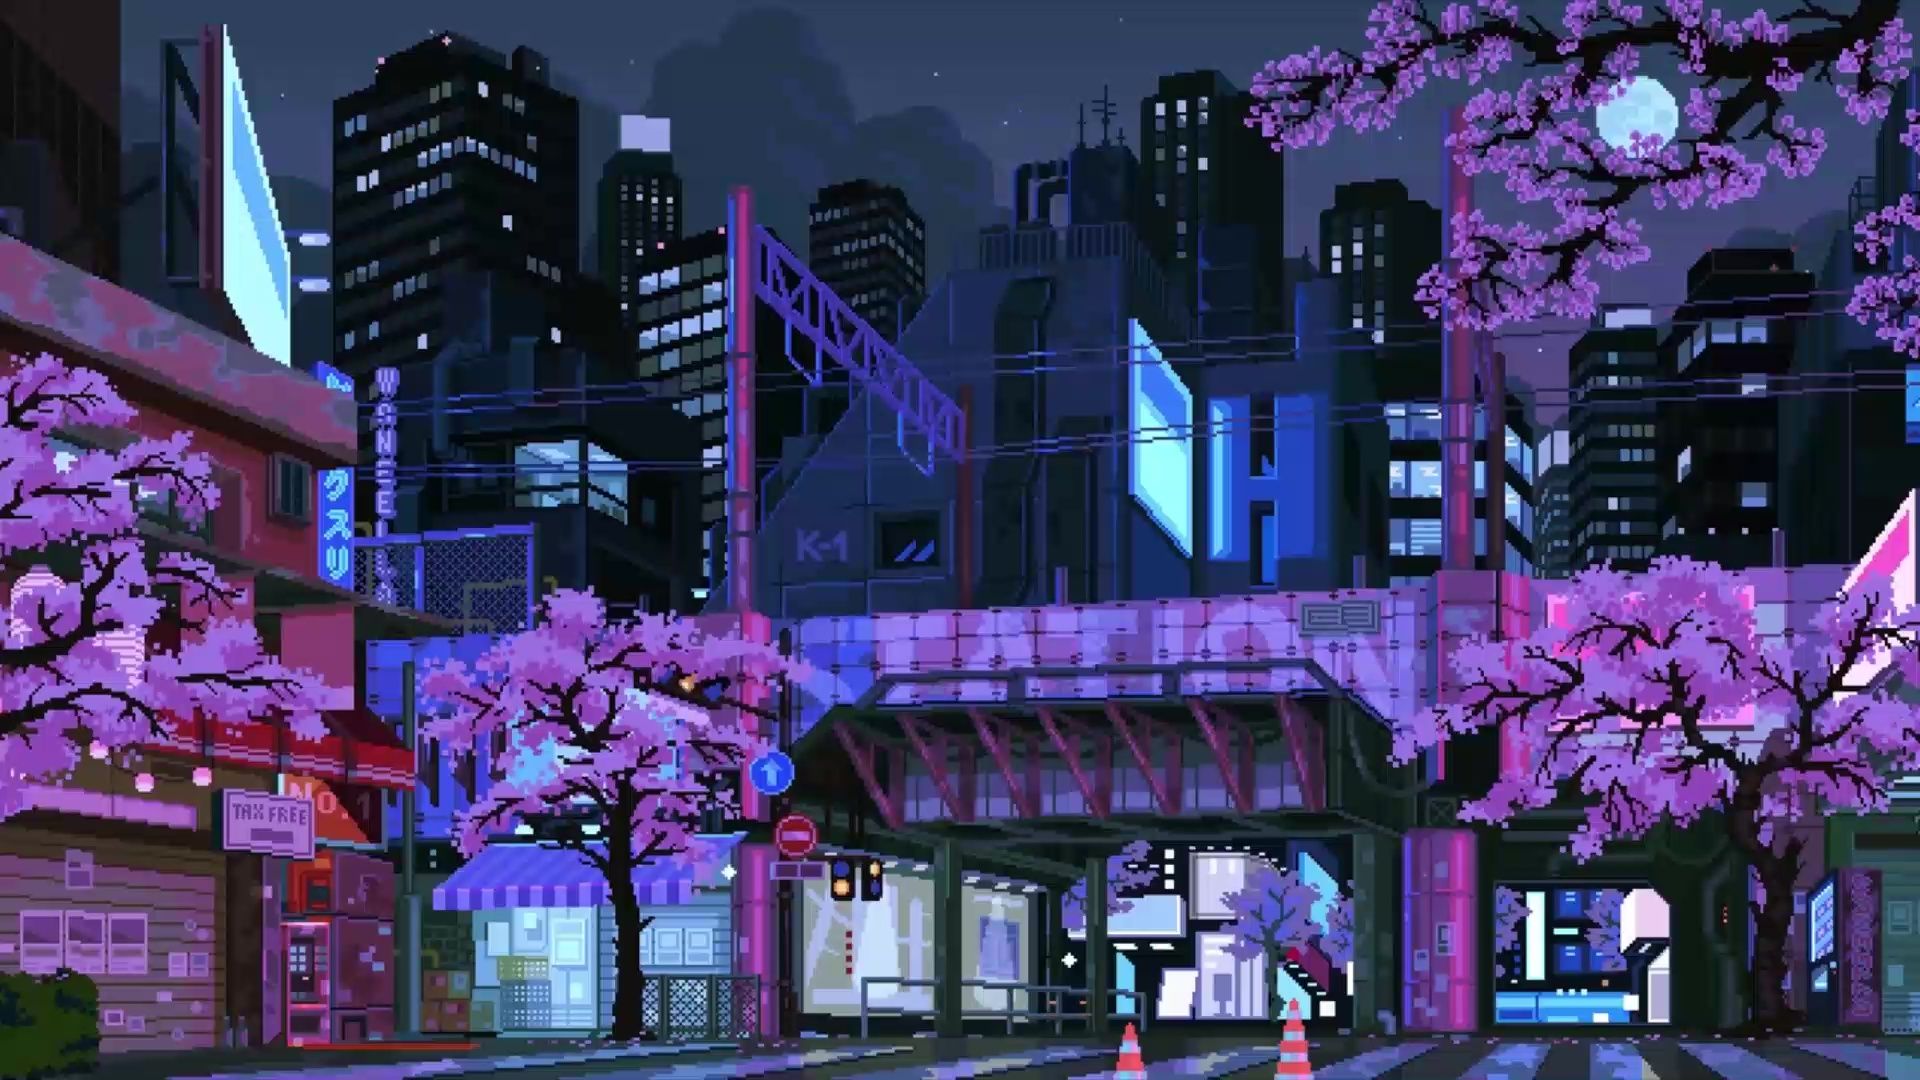 Sakura Midnight Train Live Wallpaper. Computer wallpaper hd, Cute desktop wallpaper, Computer wallpaper desktop wallpaper